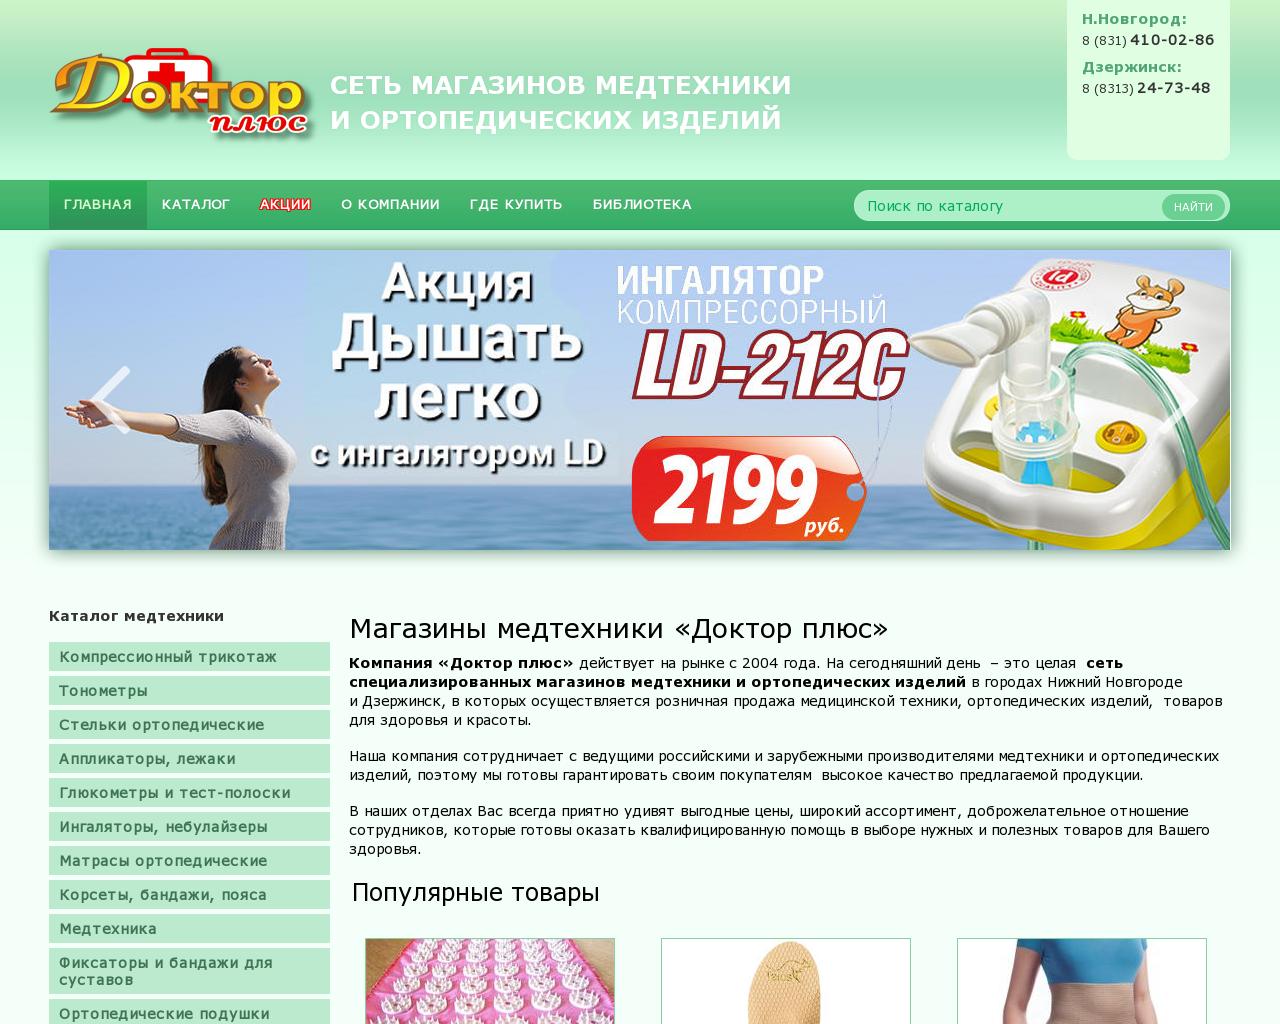 Изображение сайта mtdplus.ru в разрешении 1280x1024